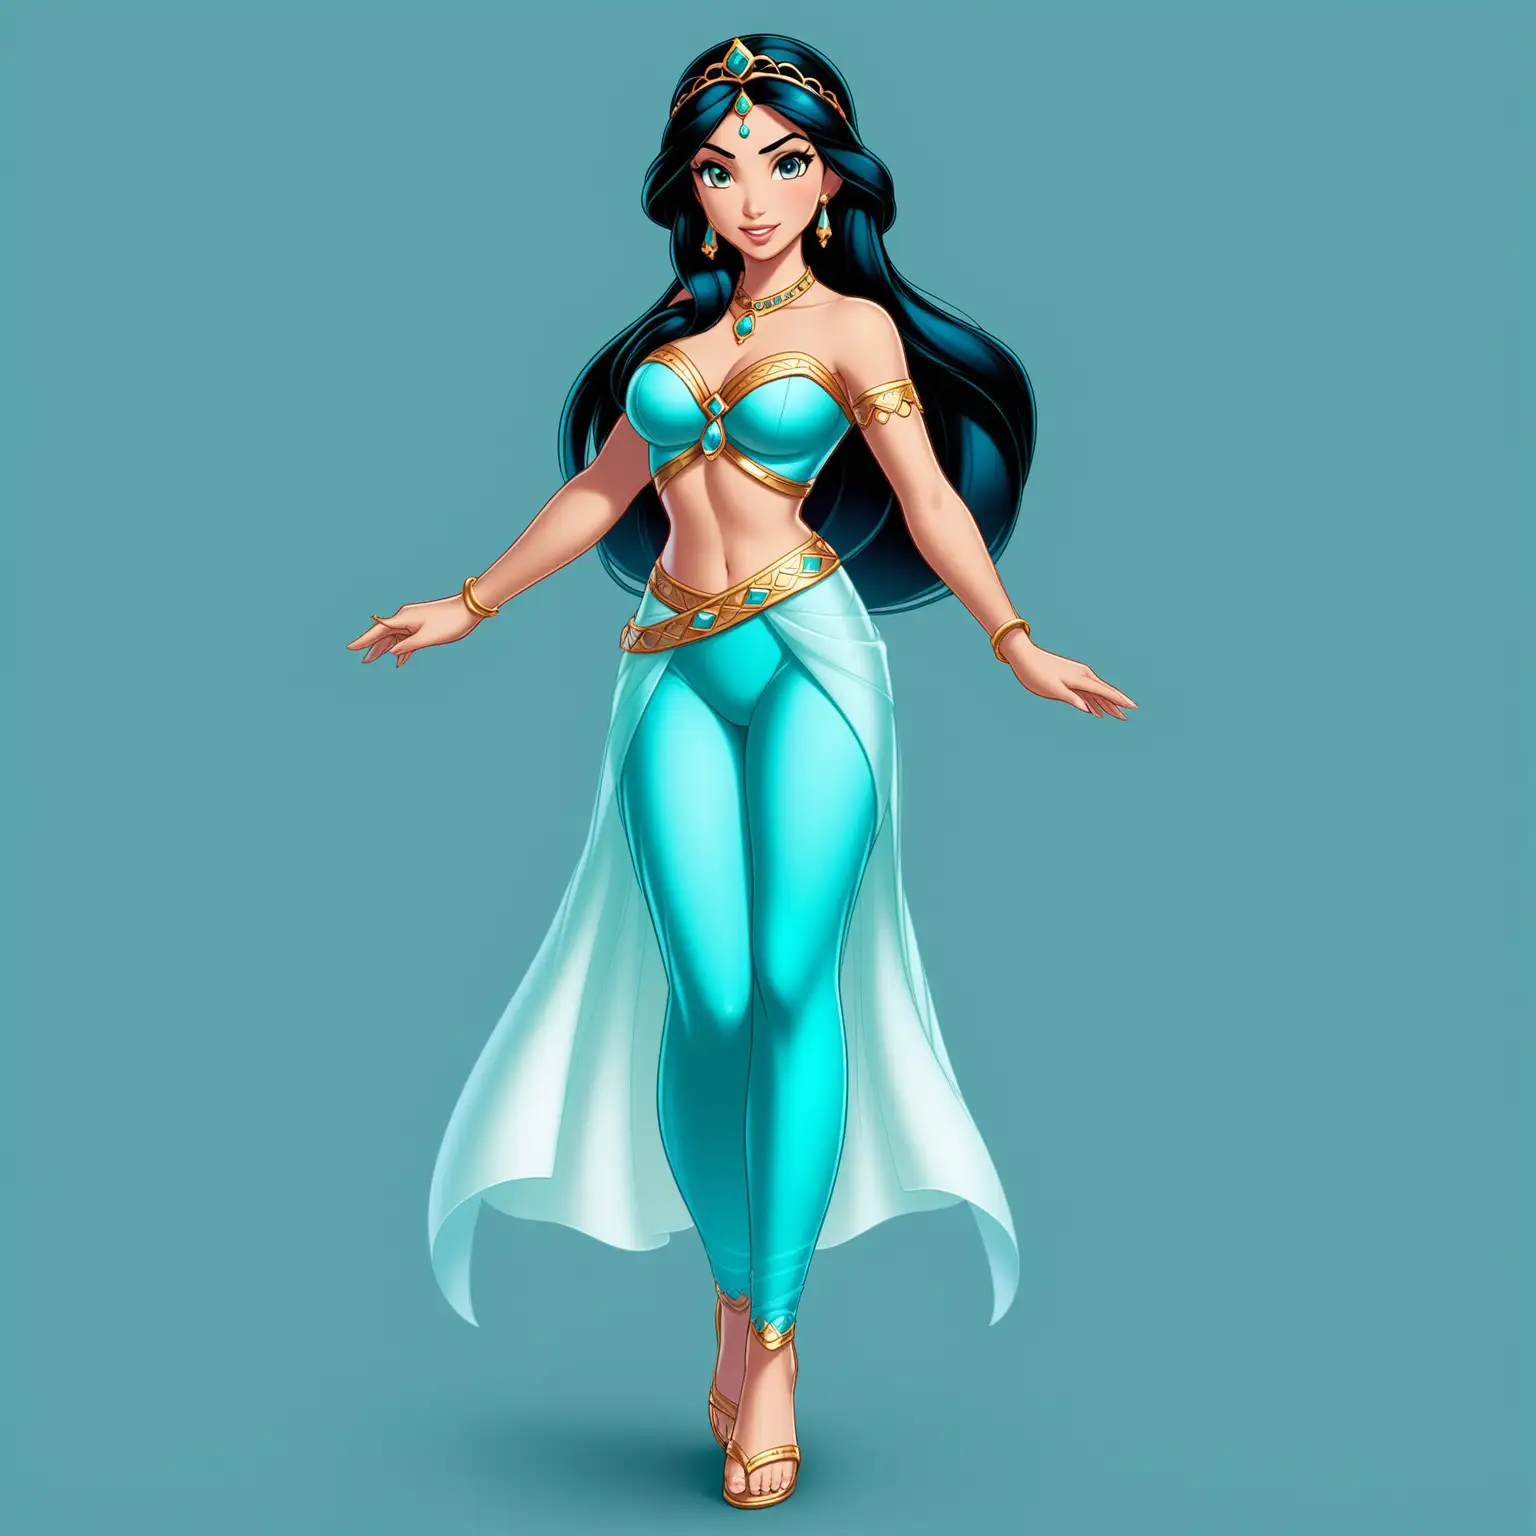 Disney Princess Jasmine full body render 